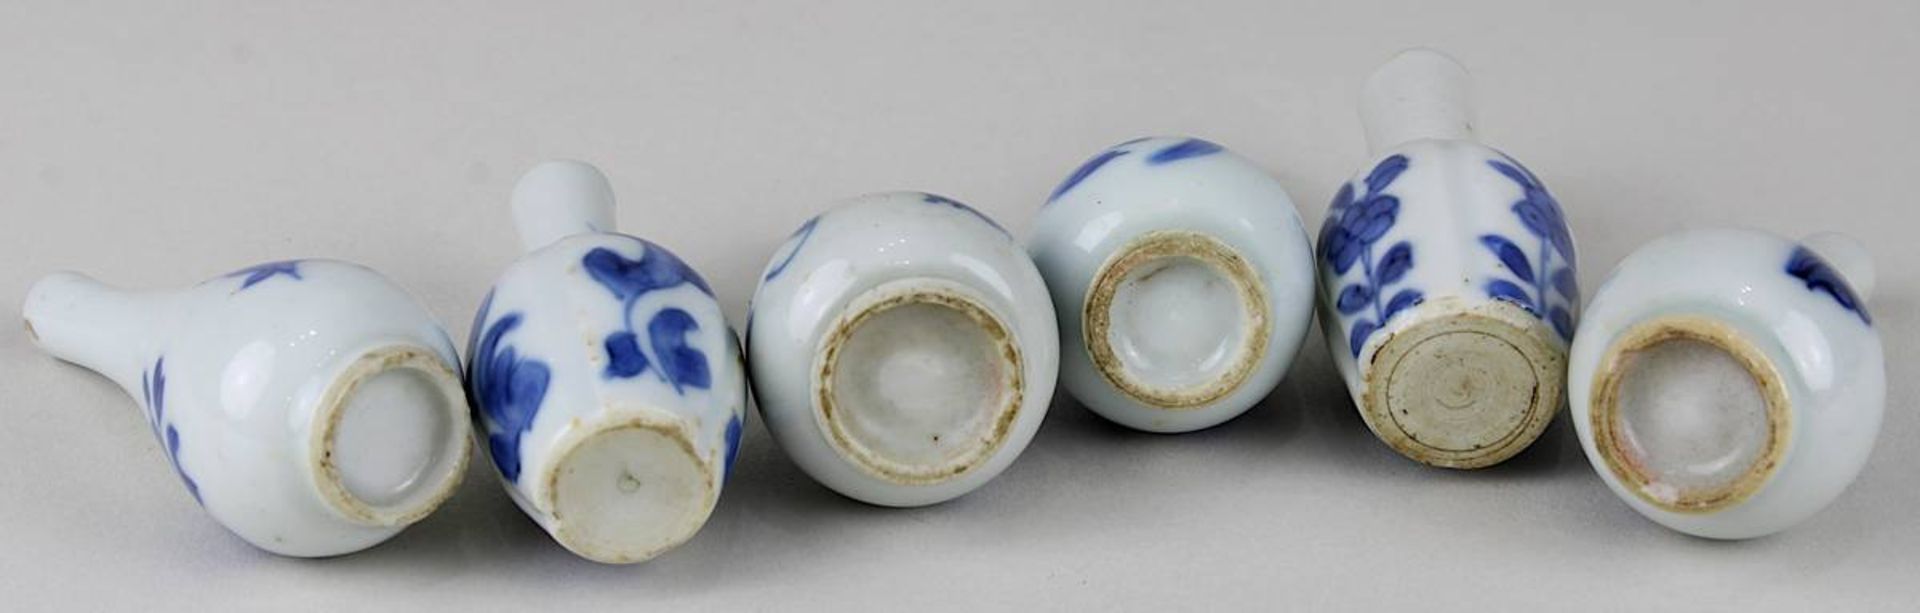 Sechs Solifleur-Miniaturvasen, China 19. Jh., Porzellan, weißer Scherben, Wandung mit floraler - Bild 2 aus 2